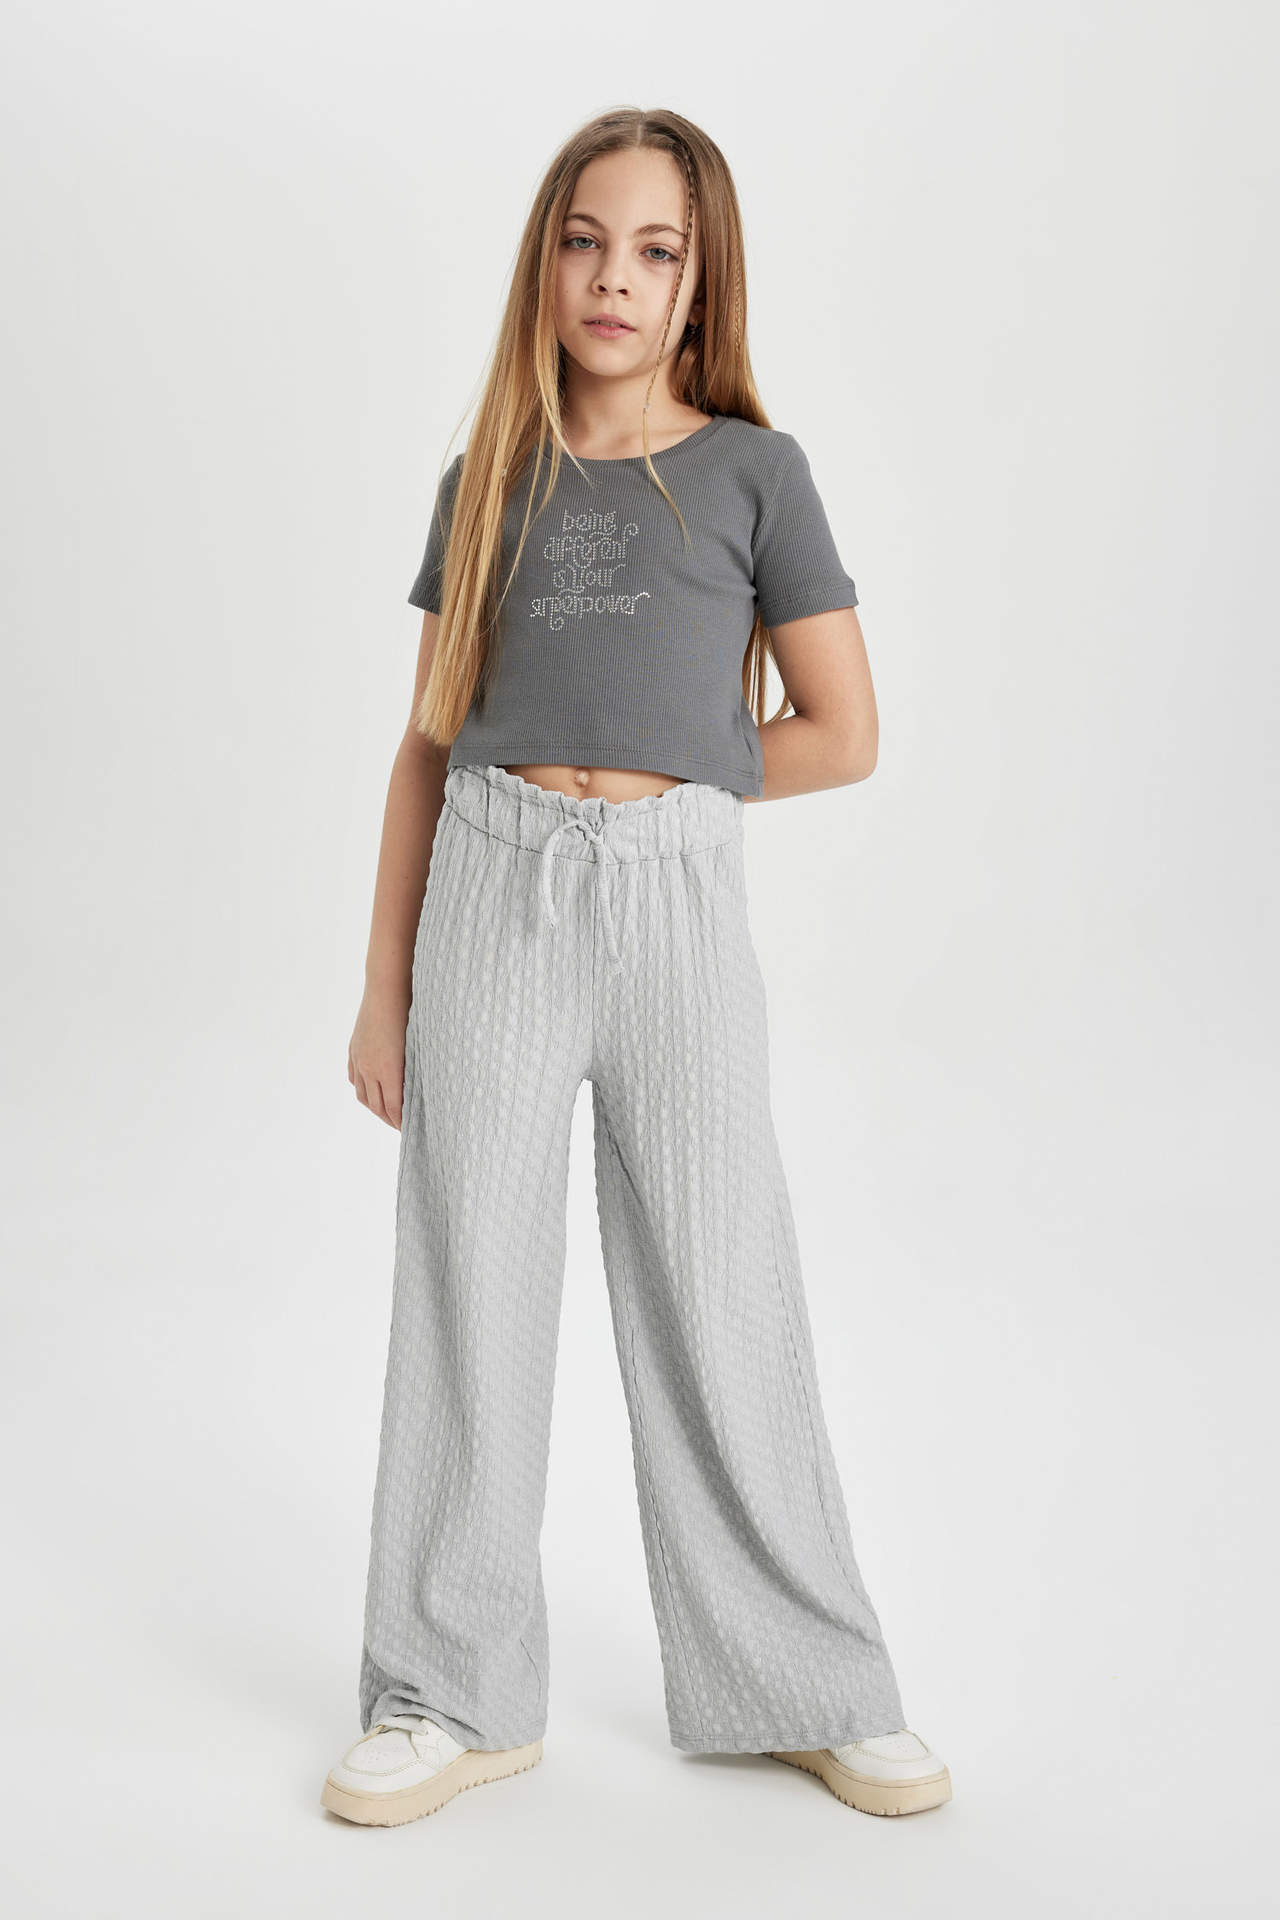 Levně DEFACTO Girl Printed Short Sleeve T-Shirt Trousers 2 Piece Set